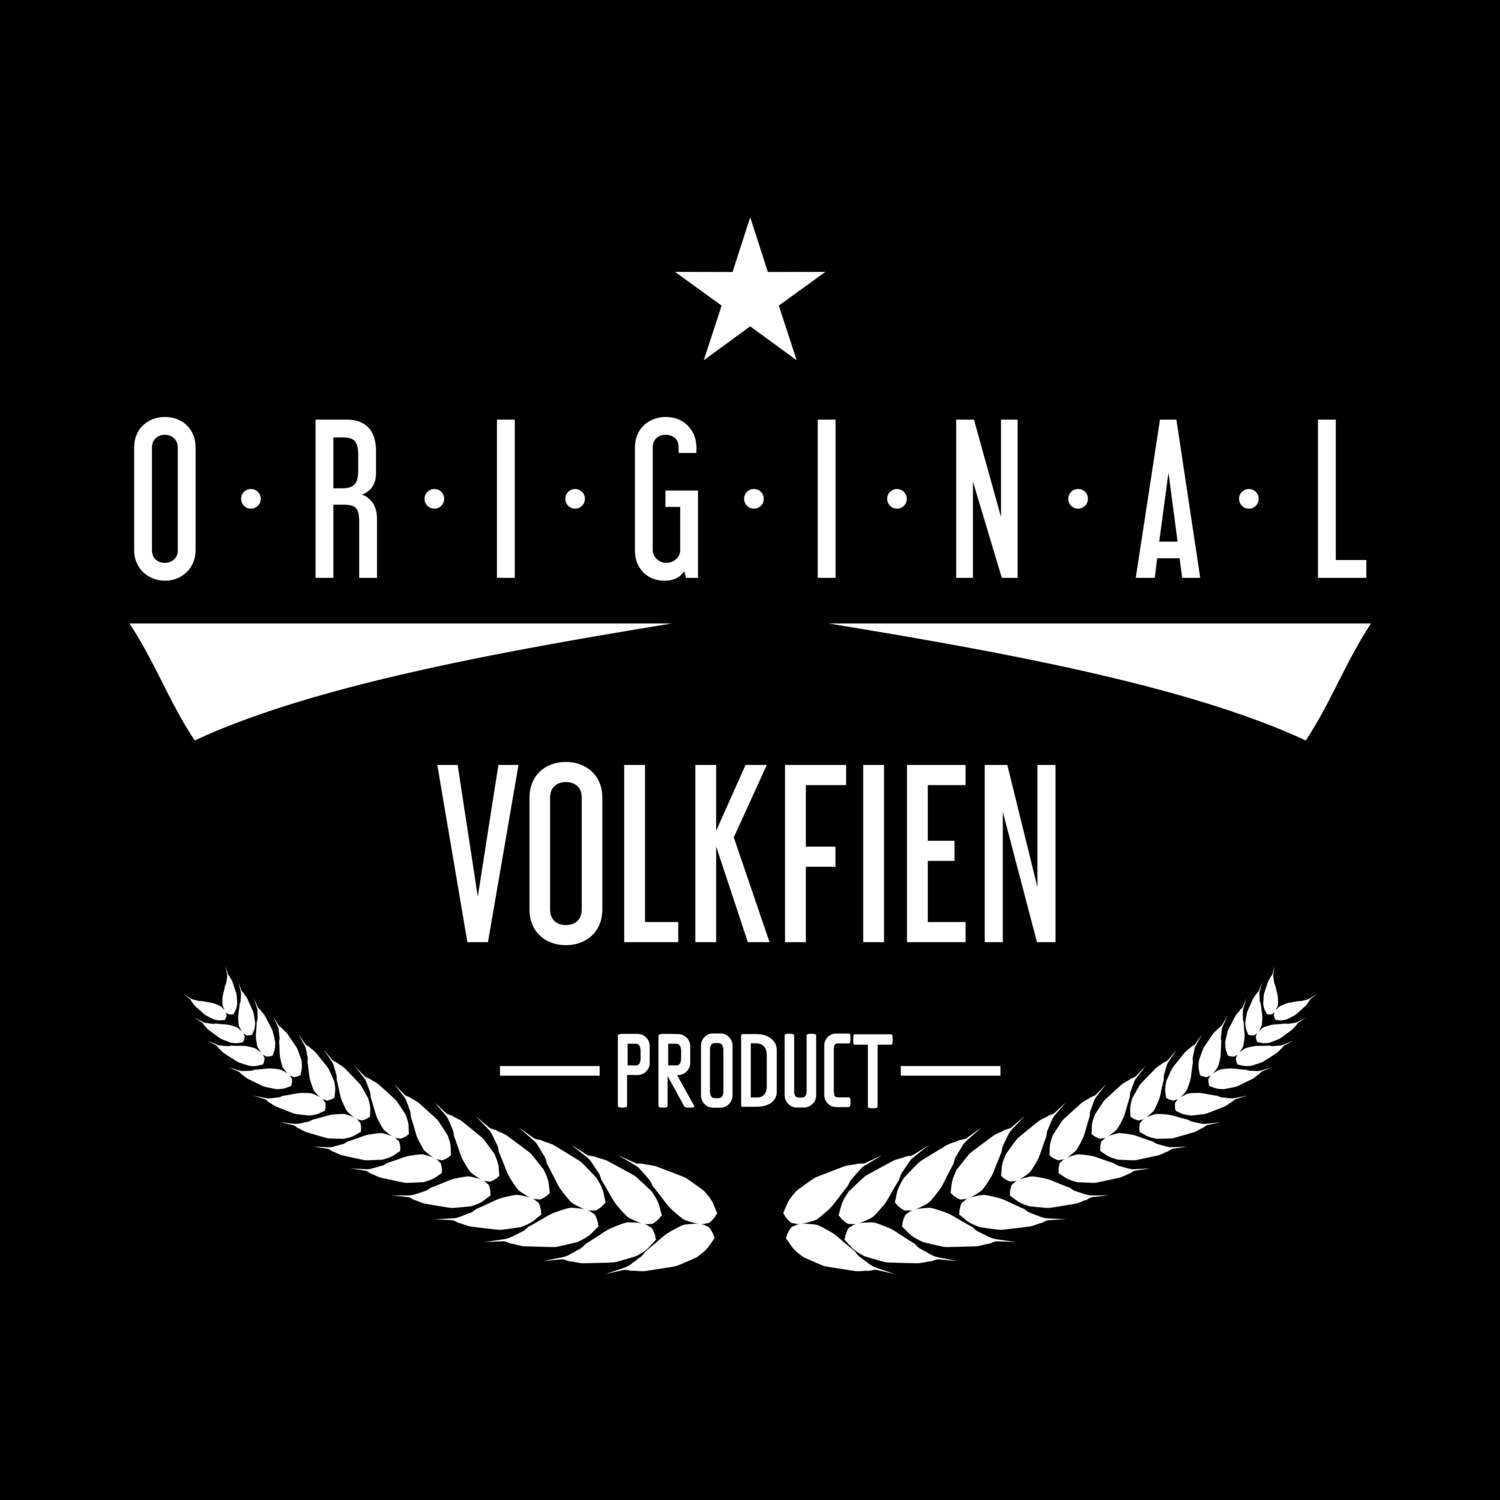 Volkfien T-Shirt »Original Product«